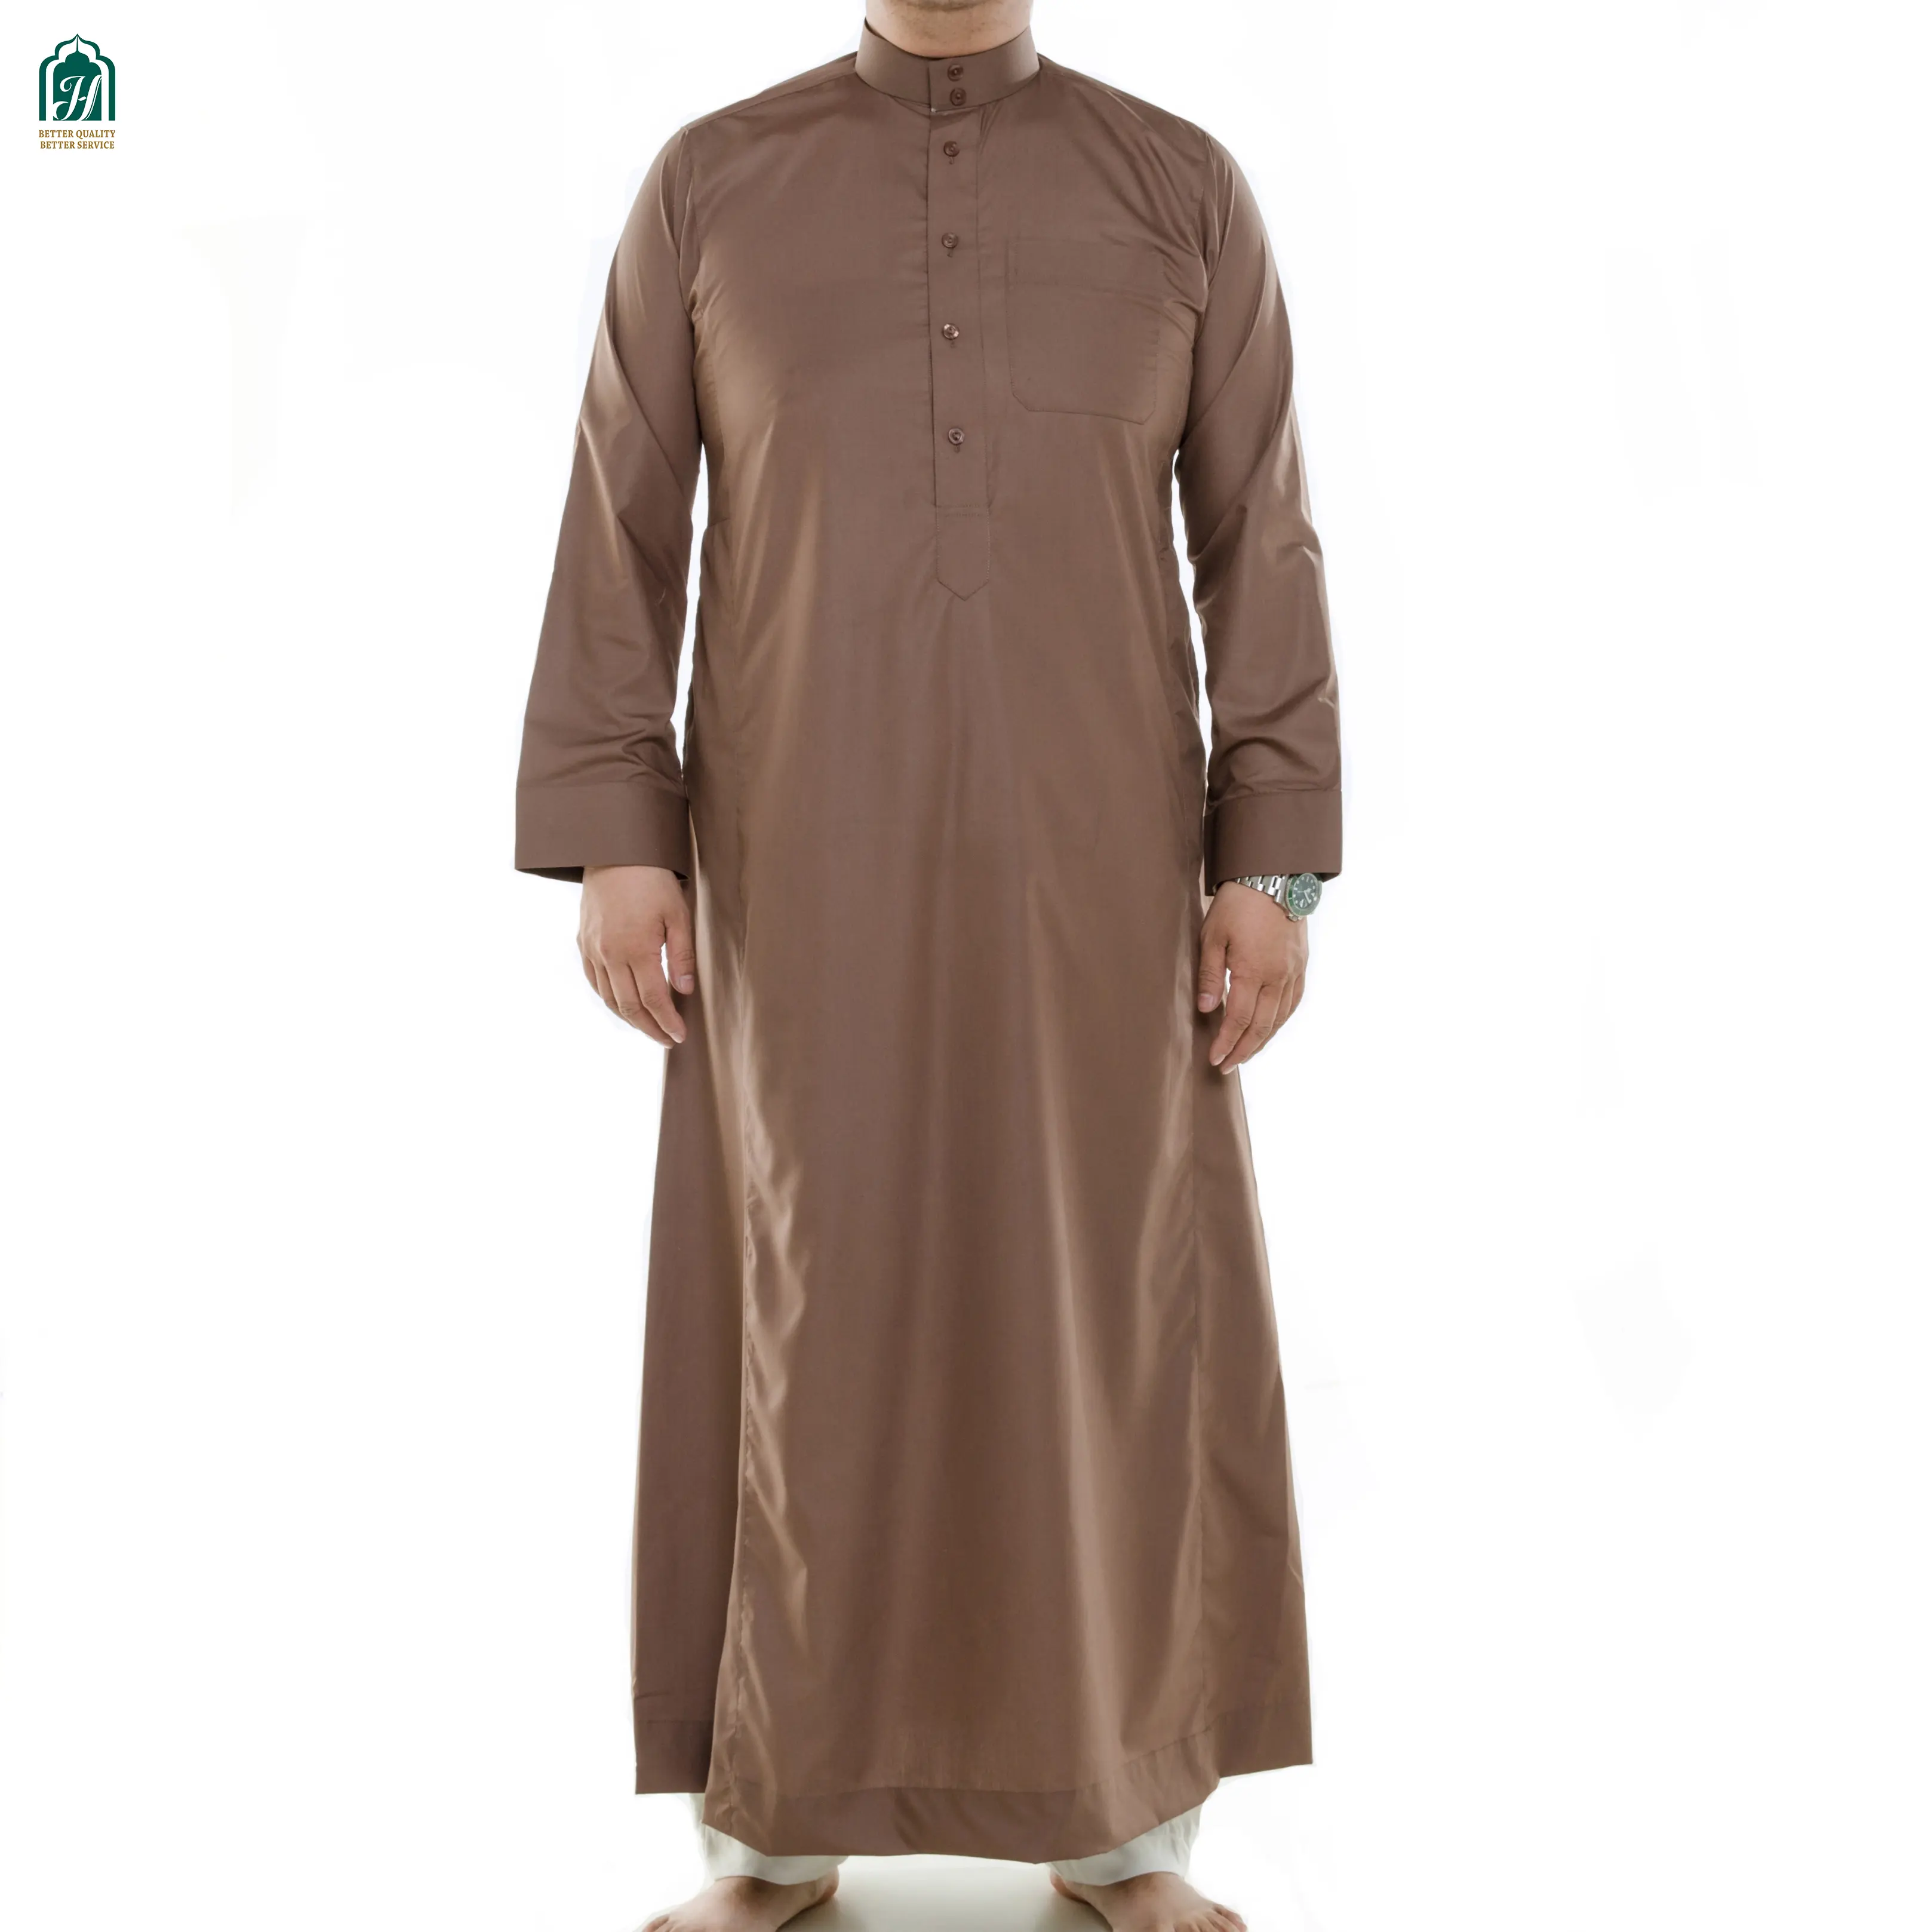 Caftán musulmán para hombres, ropa árabe, camisa de manga larga, de Arabia Saudita túnica tradicional, trajes musulmanes